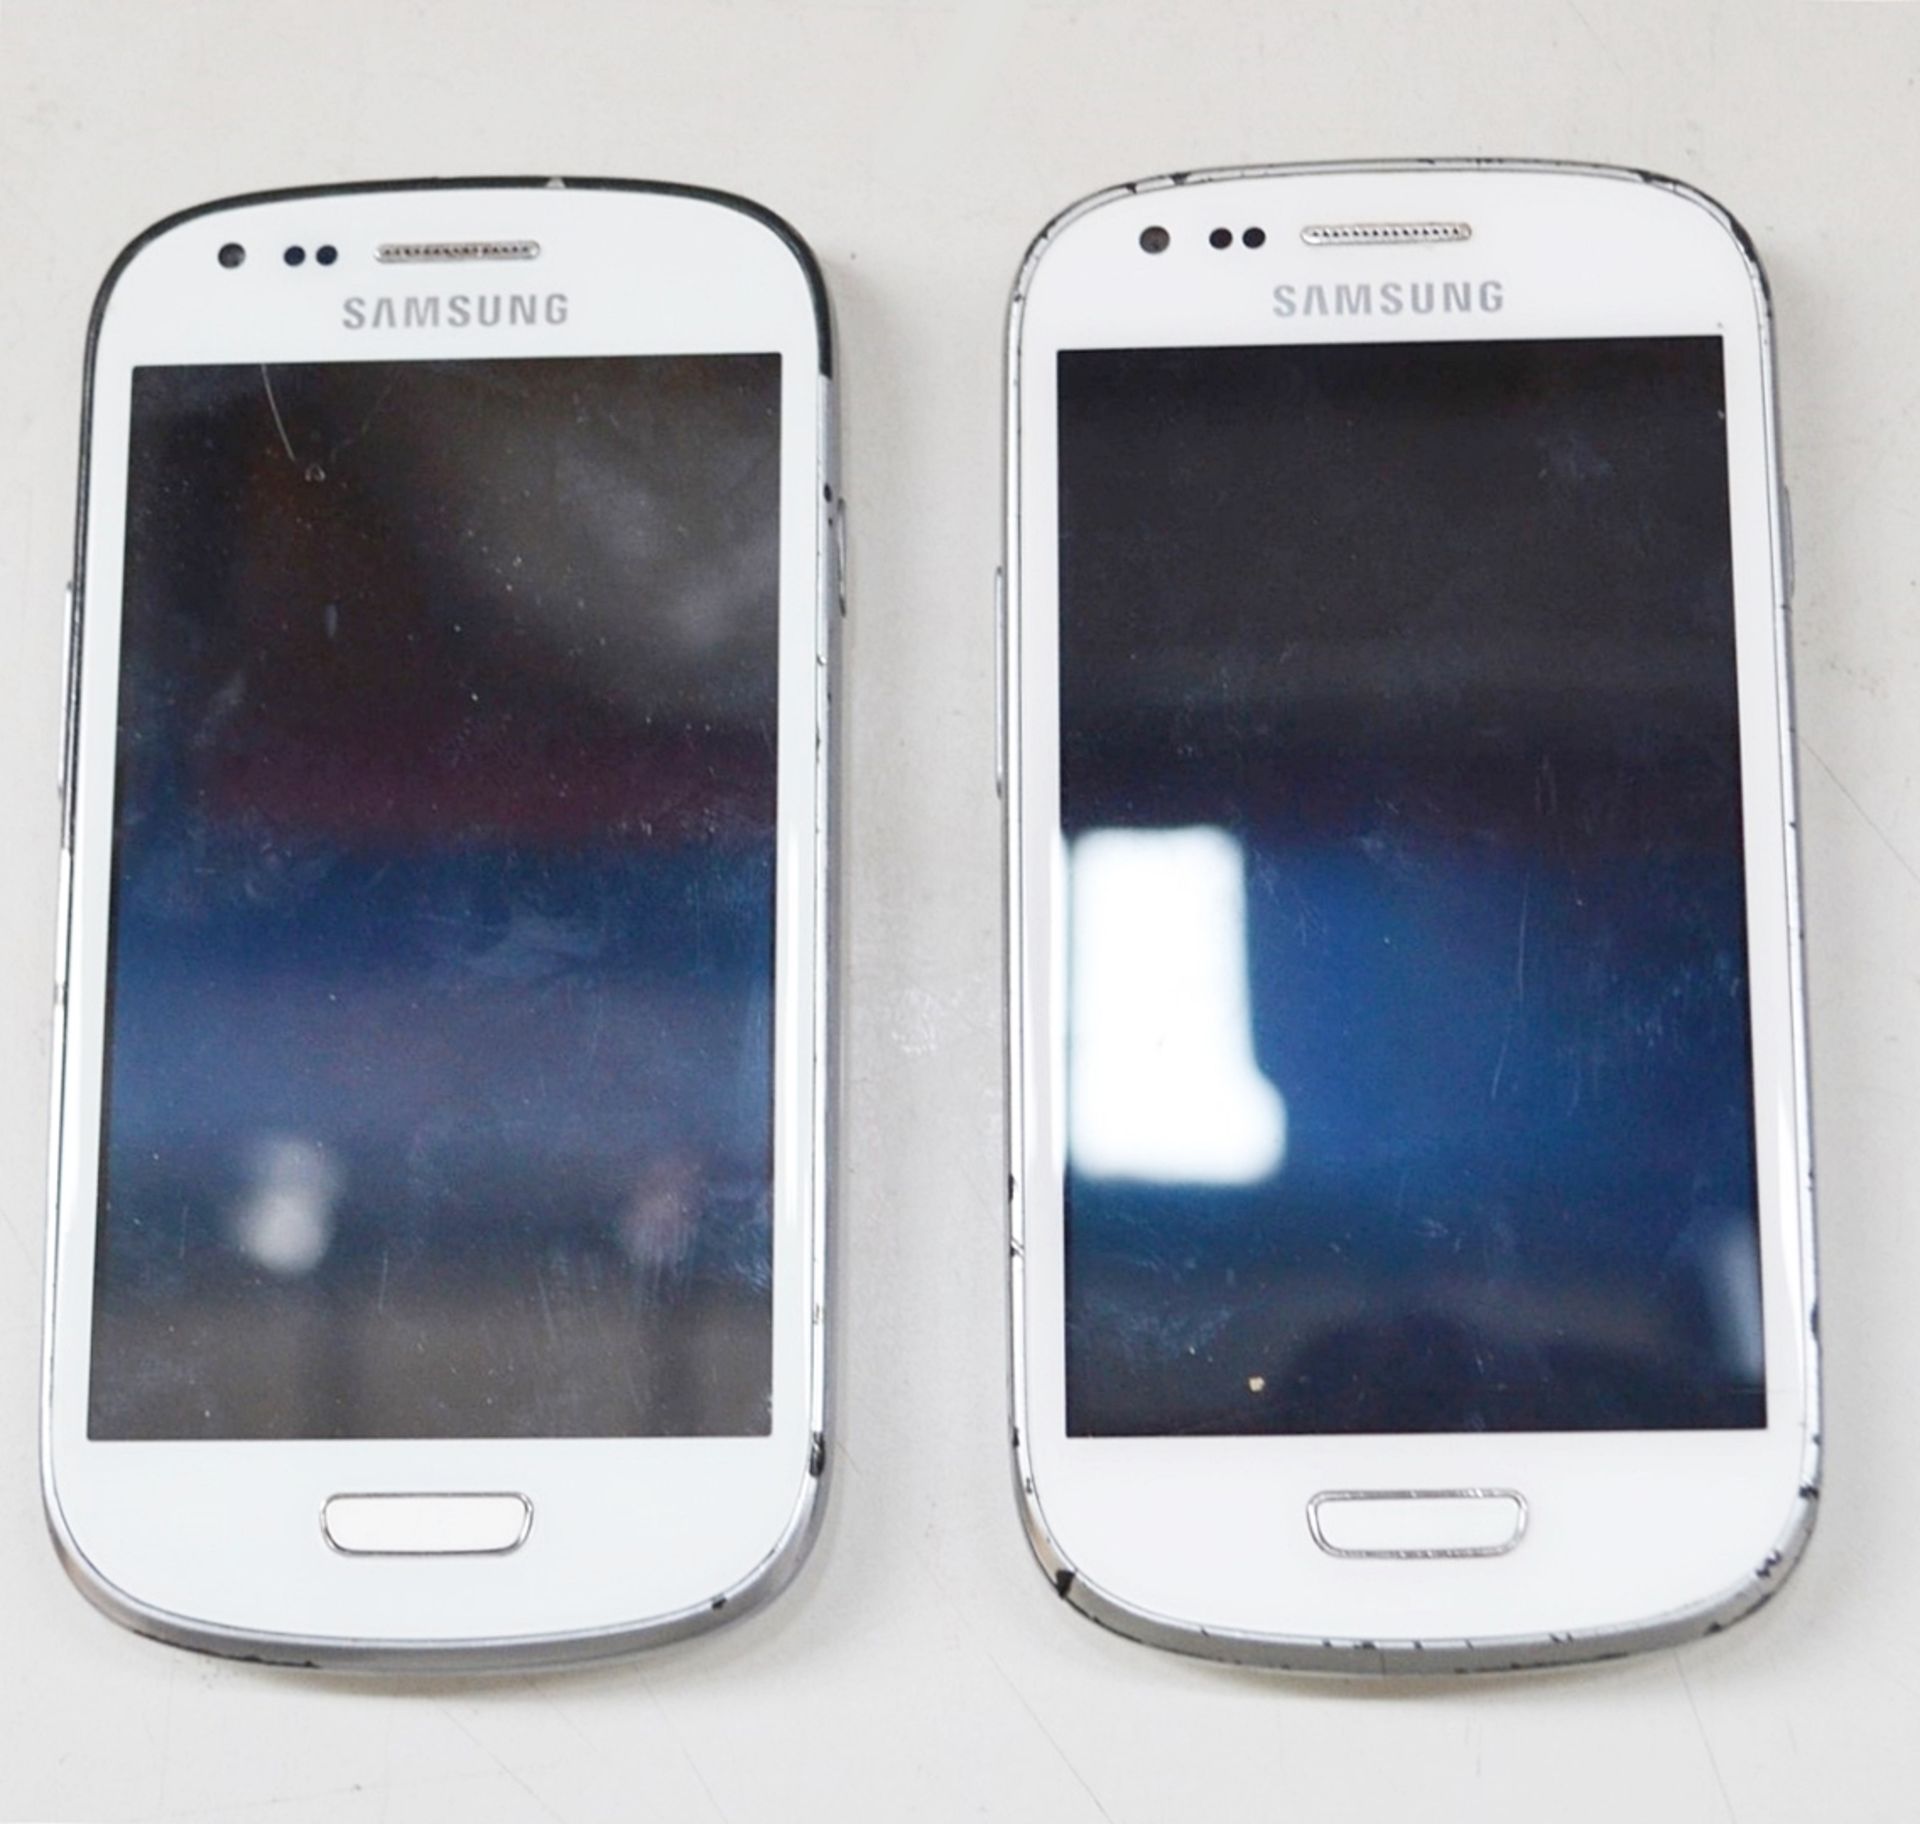 39 x Sim Free Blackberry and Samsung Phones - Ref: LD368 - CL409 - Altrincham WA14 - Image 11 of 20